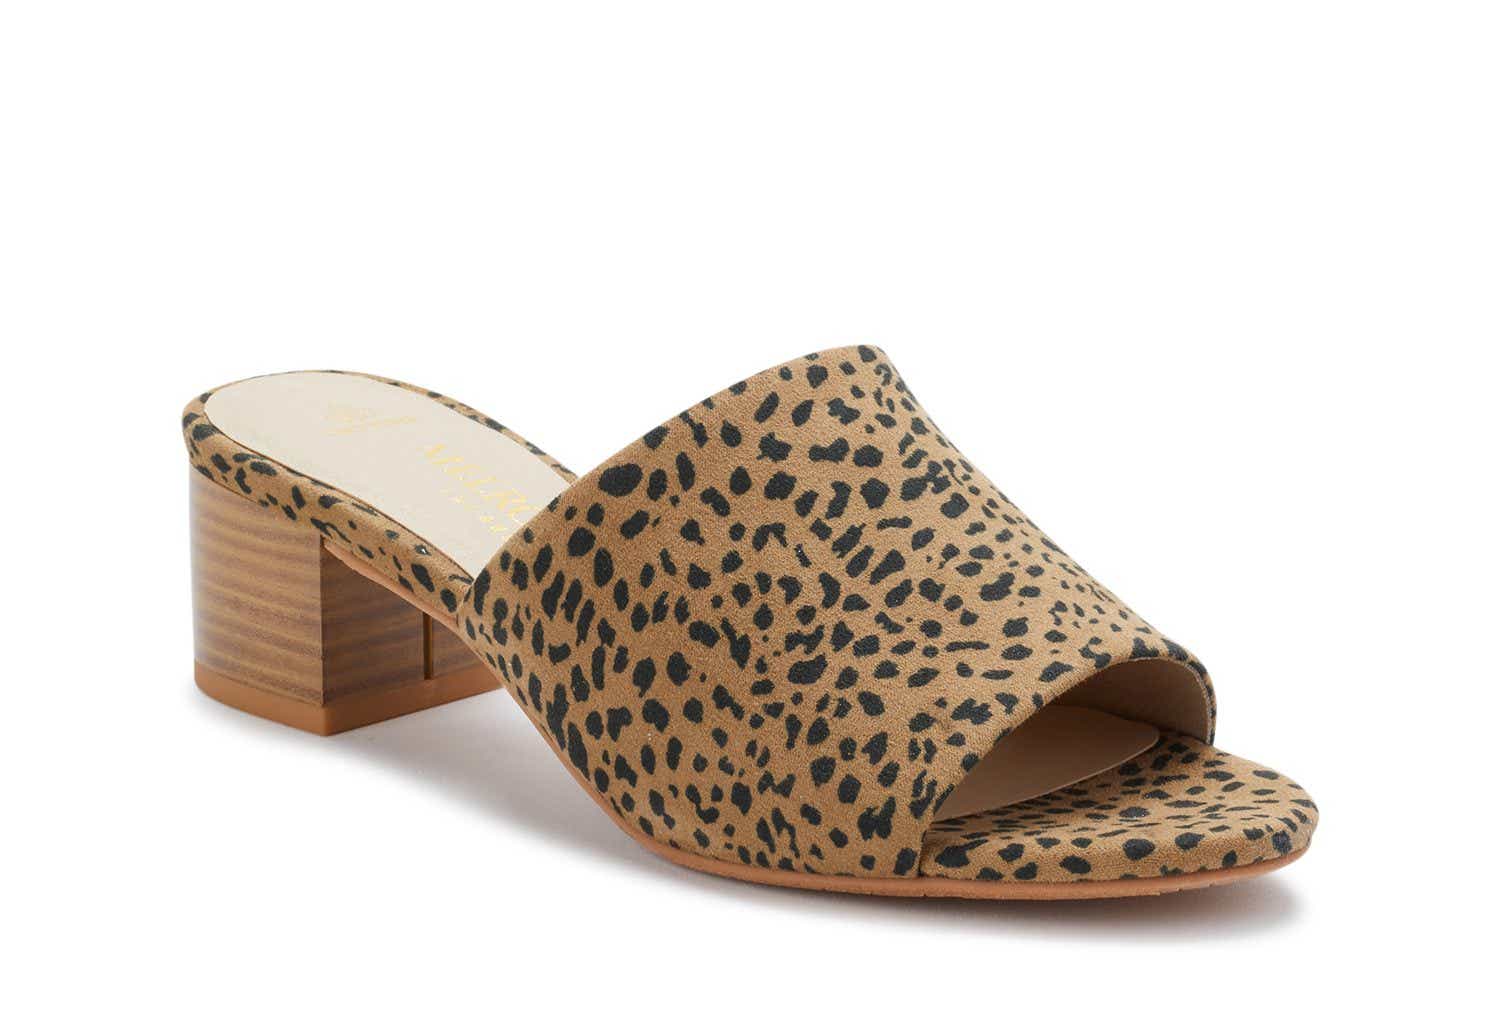 Walmart Melrose Ave Vegan Suede Cheetah Block Heel Slide Sandals (Women's)